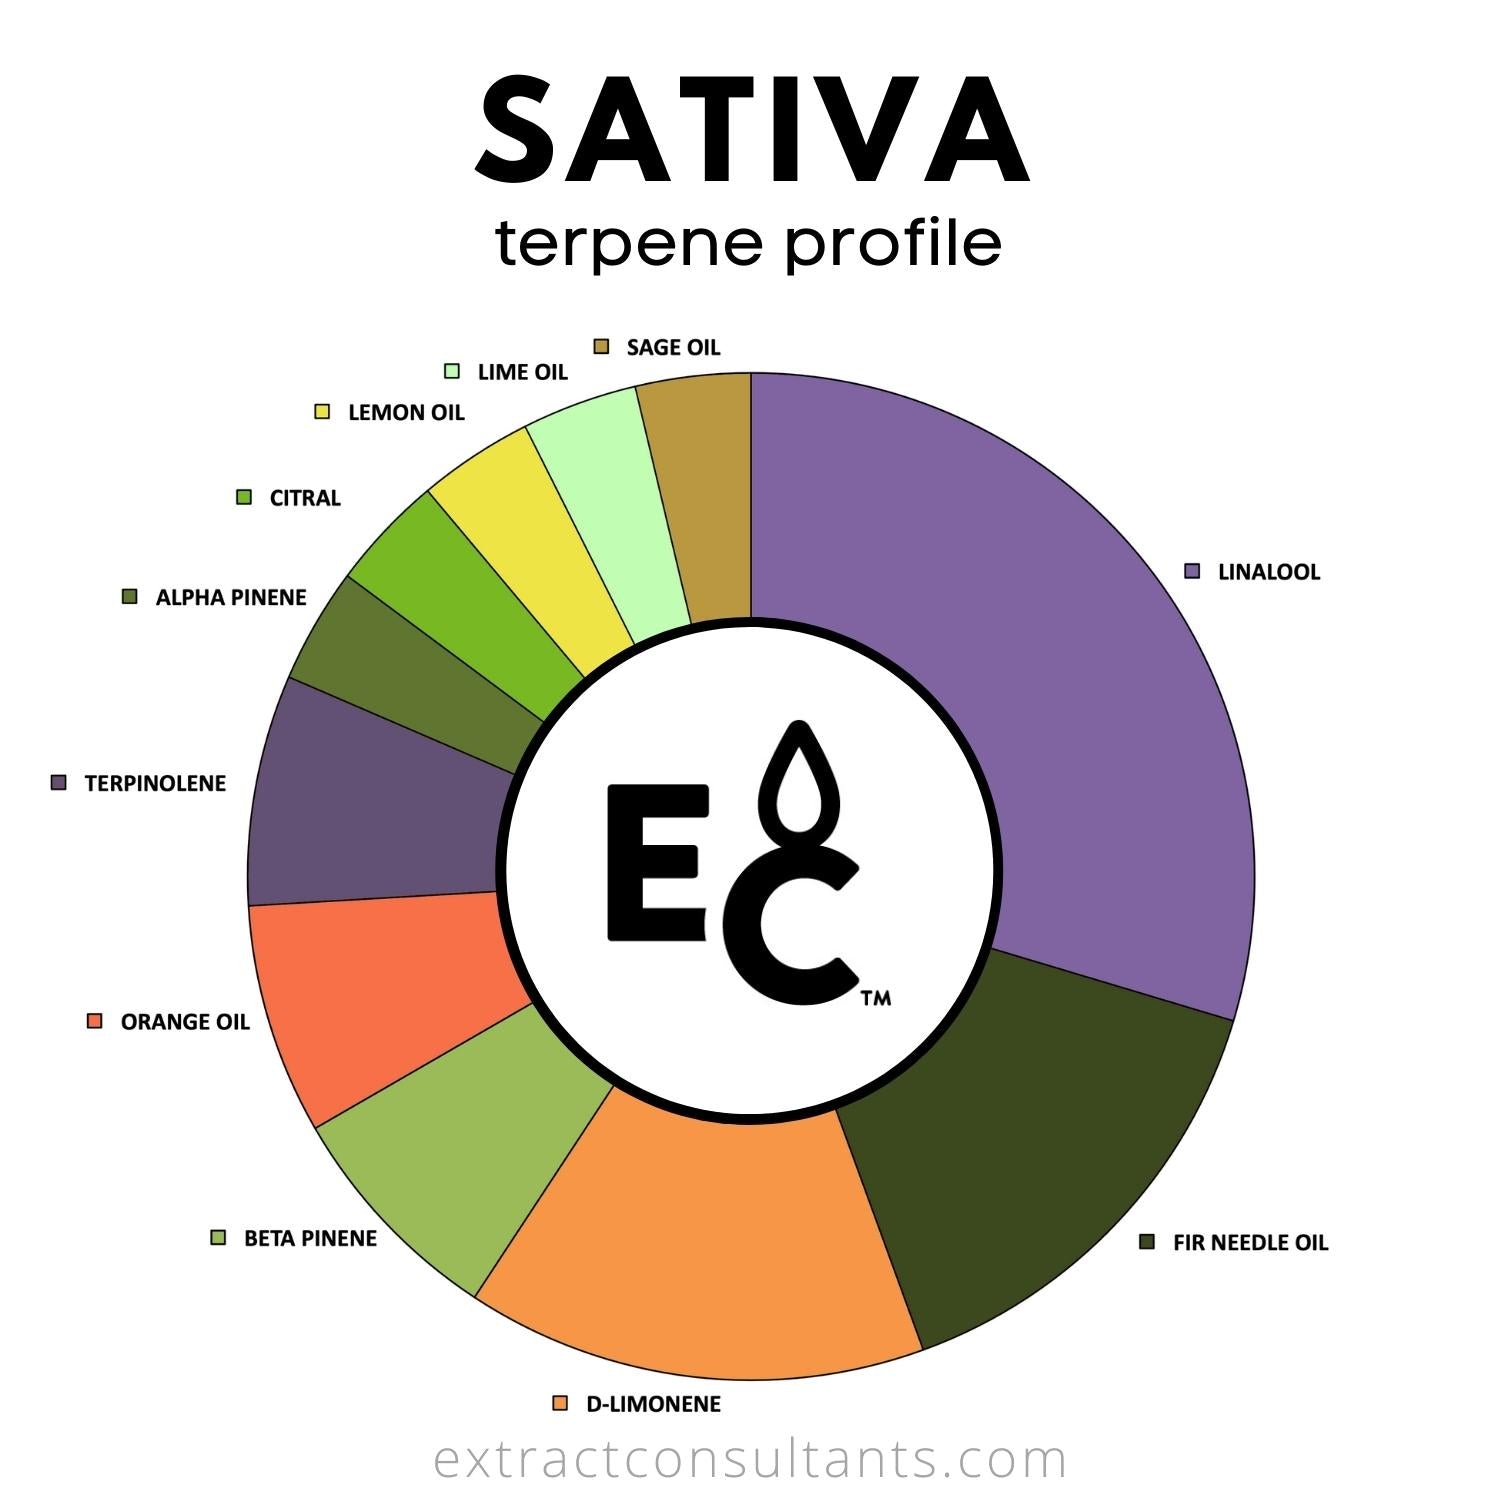 Sativa terpene profile